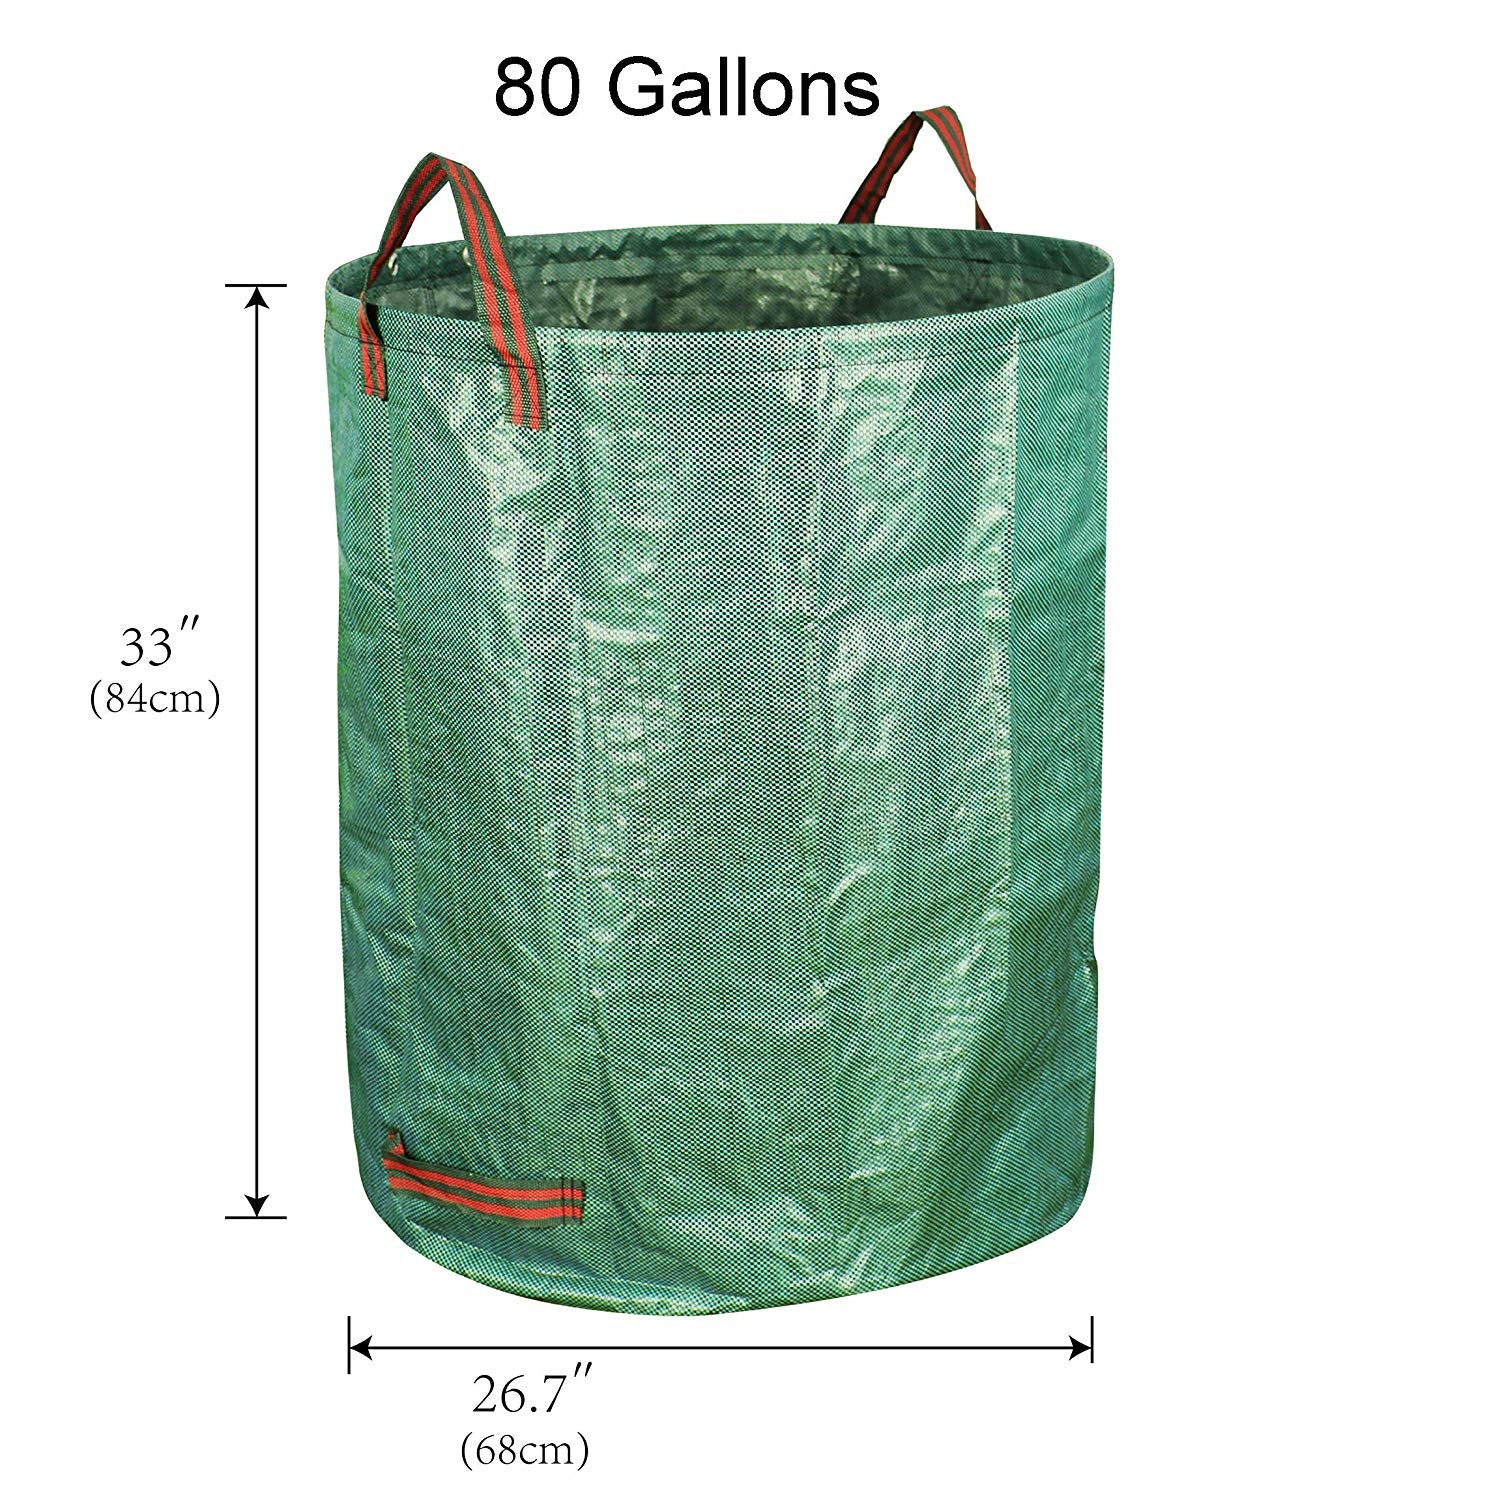 Extra Large Reuseable Gardening Bags Lawn Pool Leaf Waste Bags Trash Bags